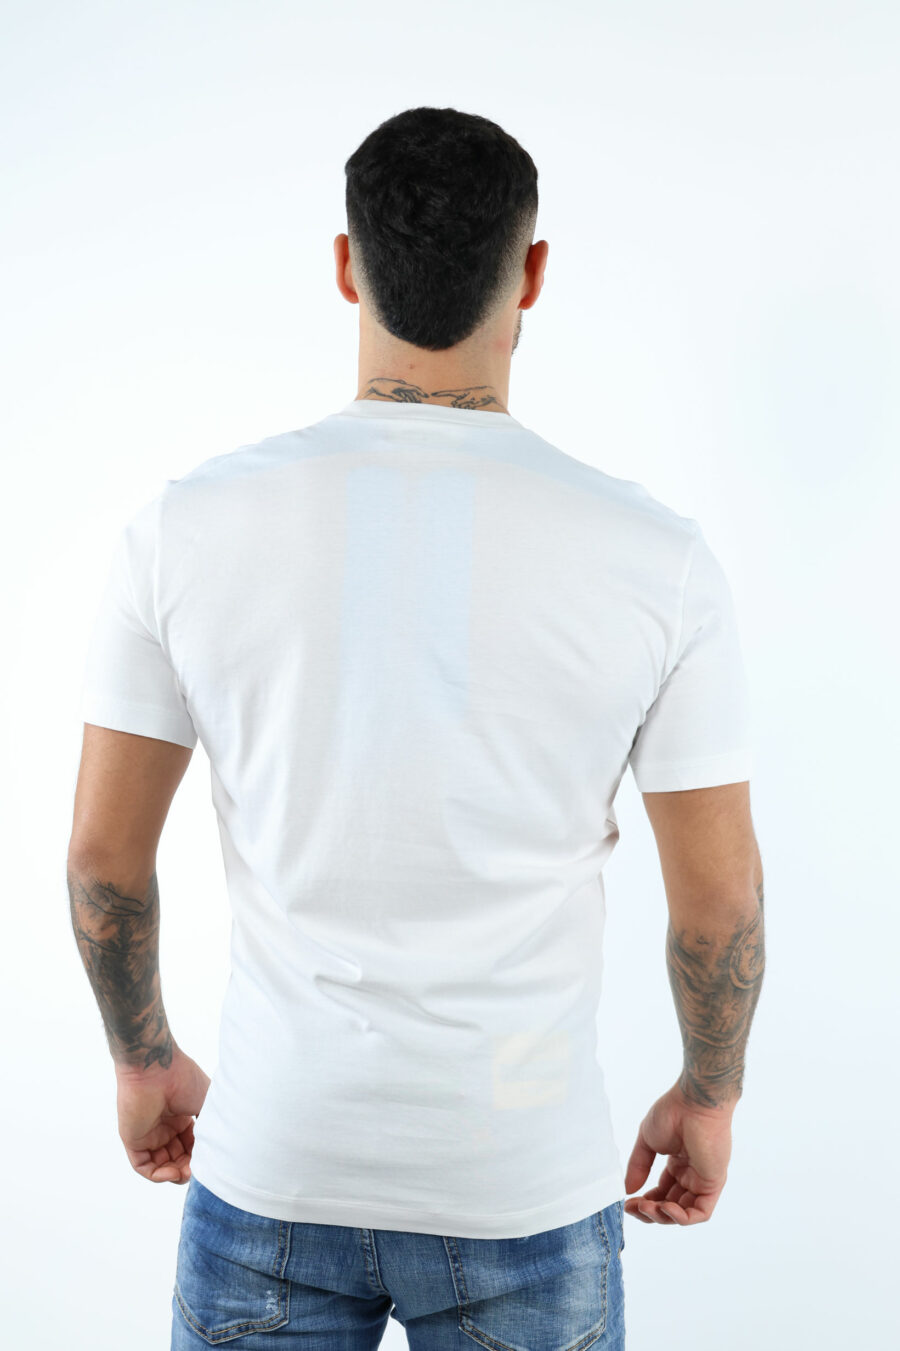 T-shirt white with minilogo "suburbans" black - 106626